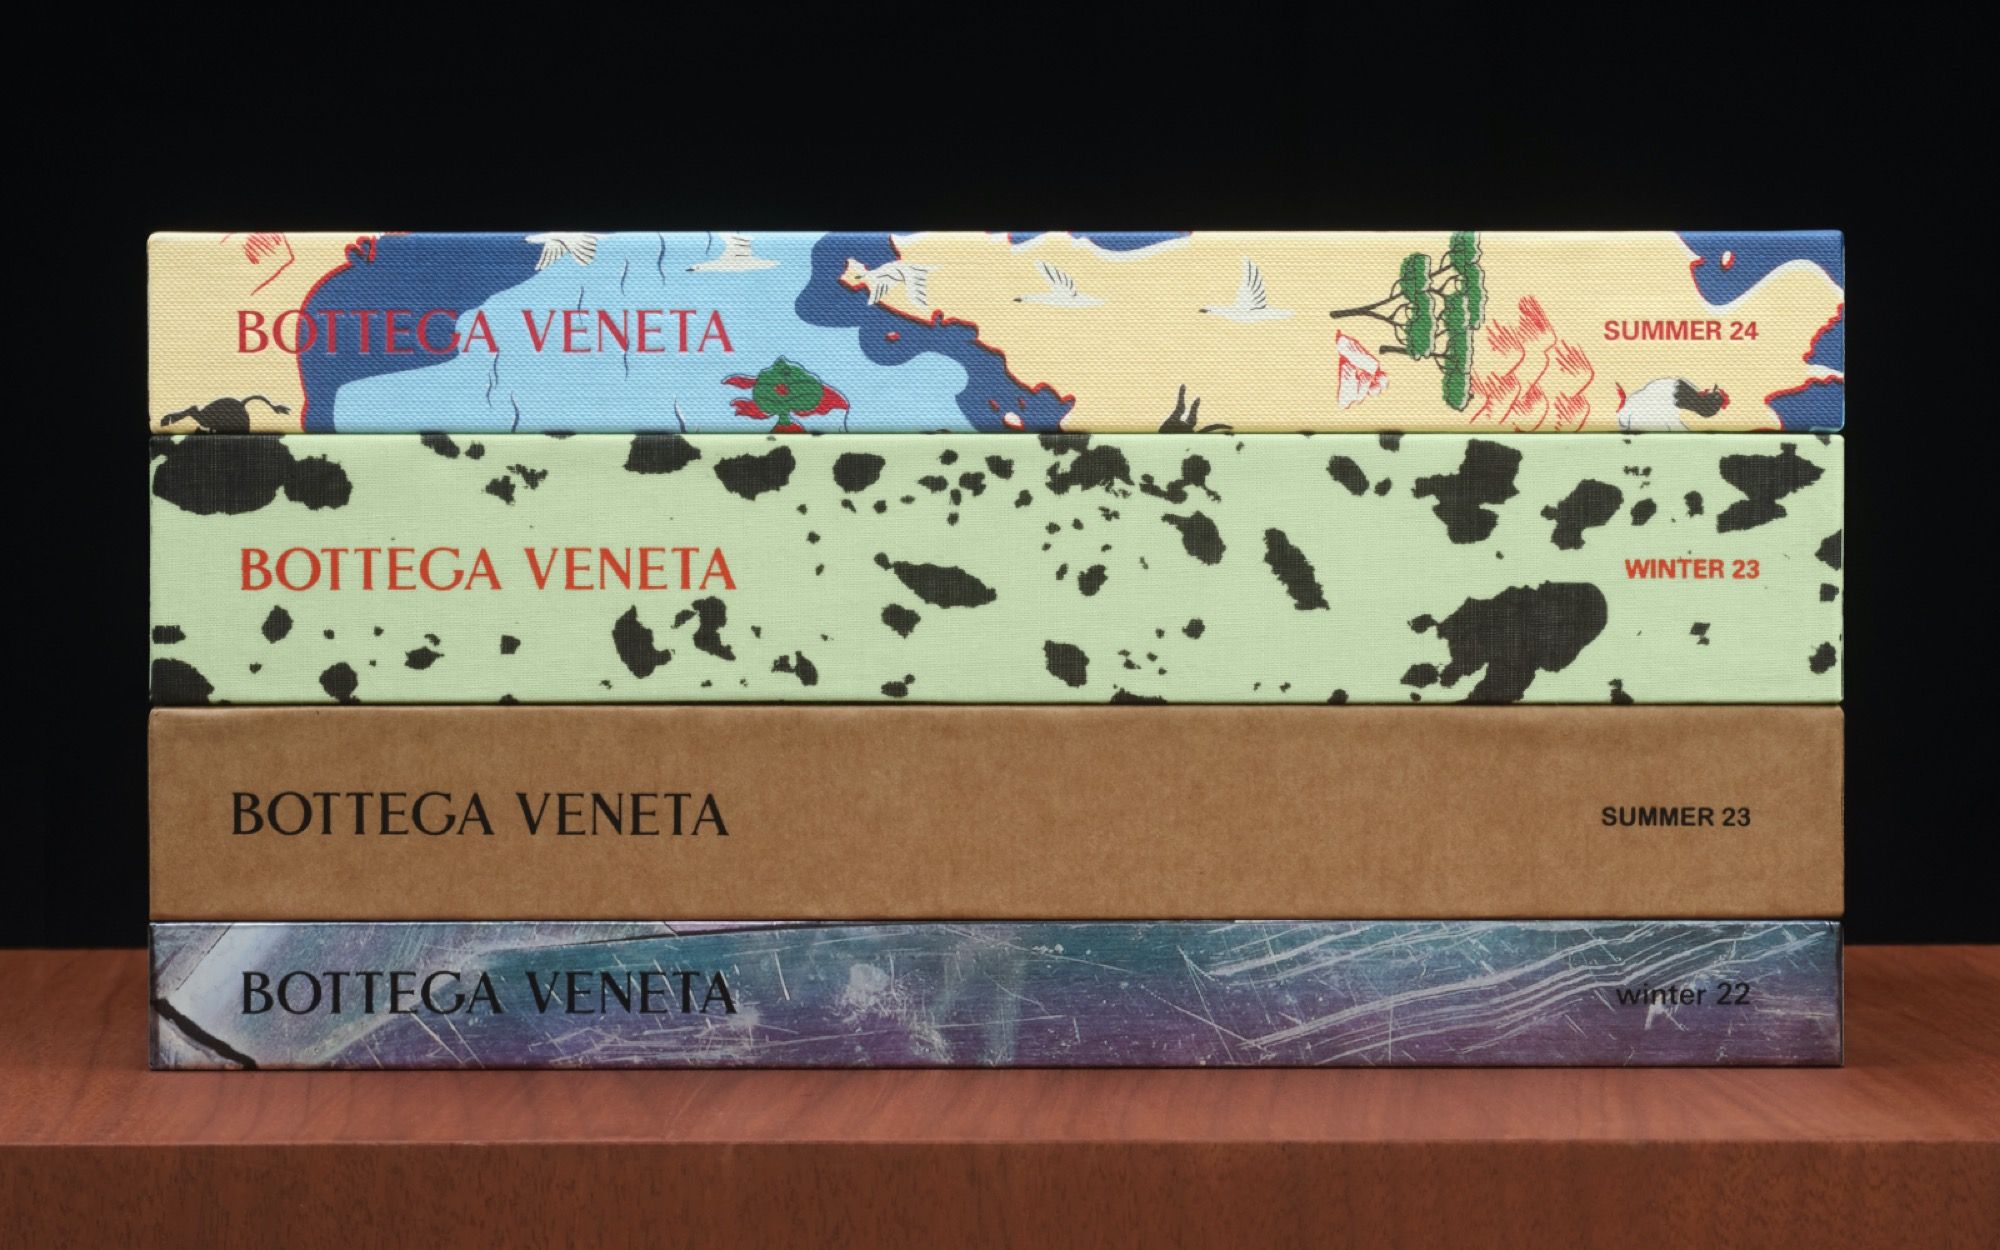 Bottega Veneta: the fanzine chronicling the Summer 24 collection